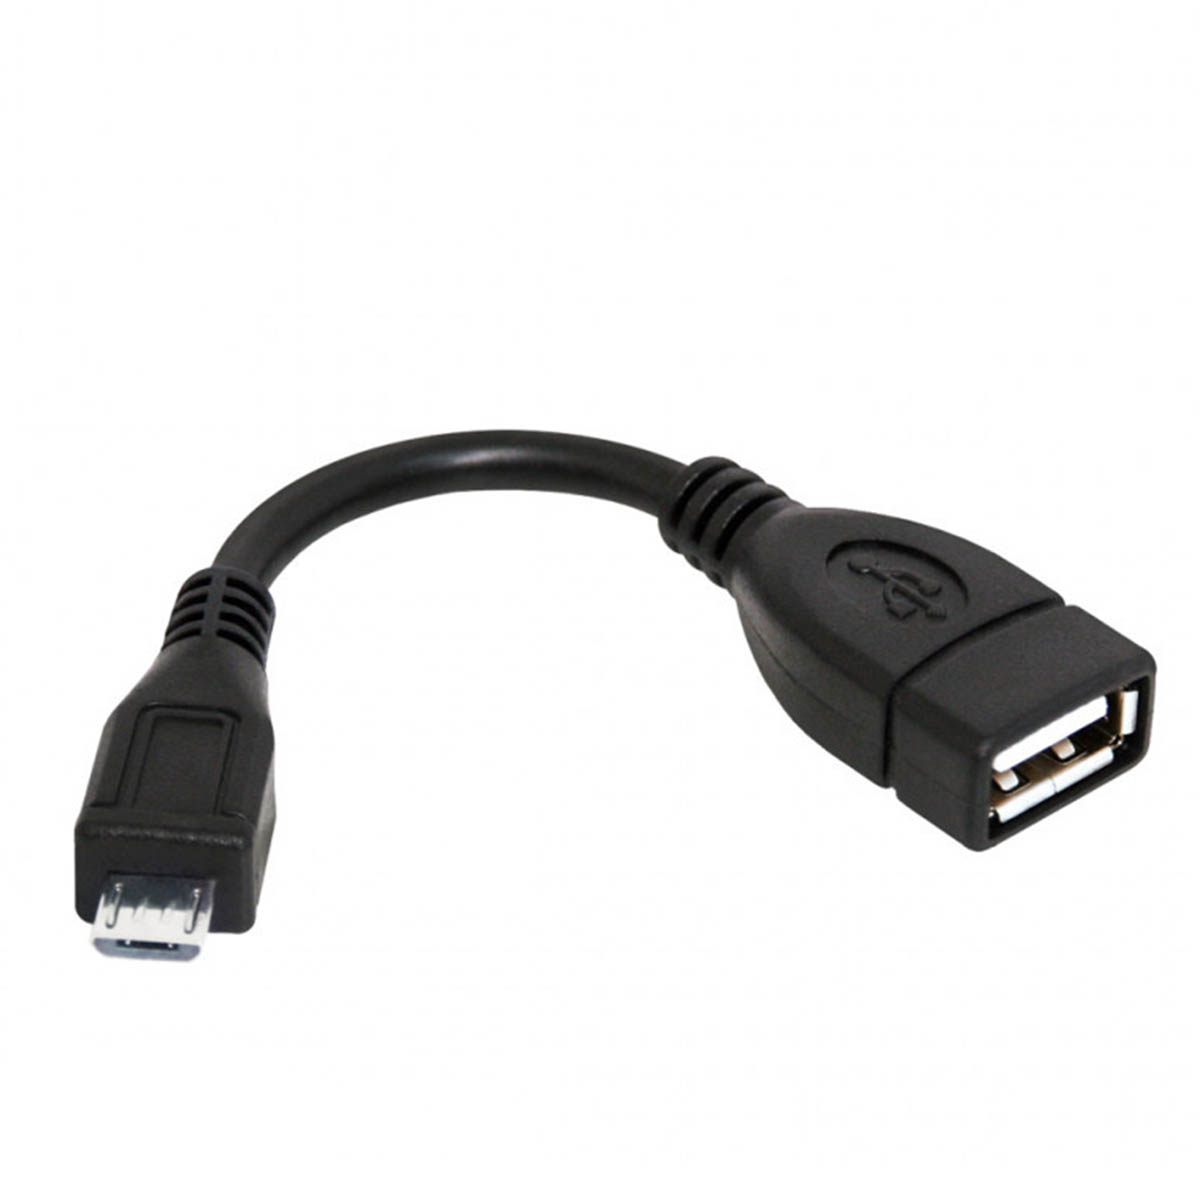 OTG переходник, адаптер, конвертер T11, micro USB, длина кабеля 10 см, цвет черный